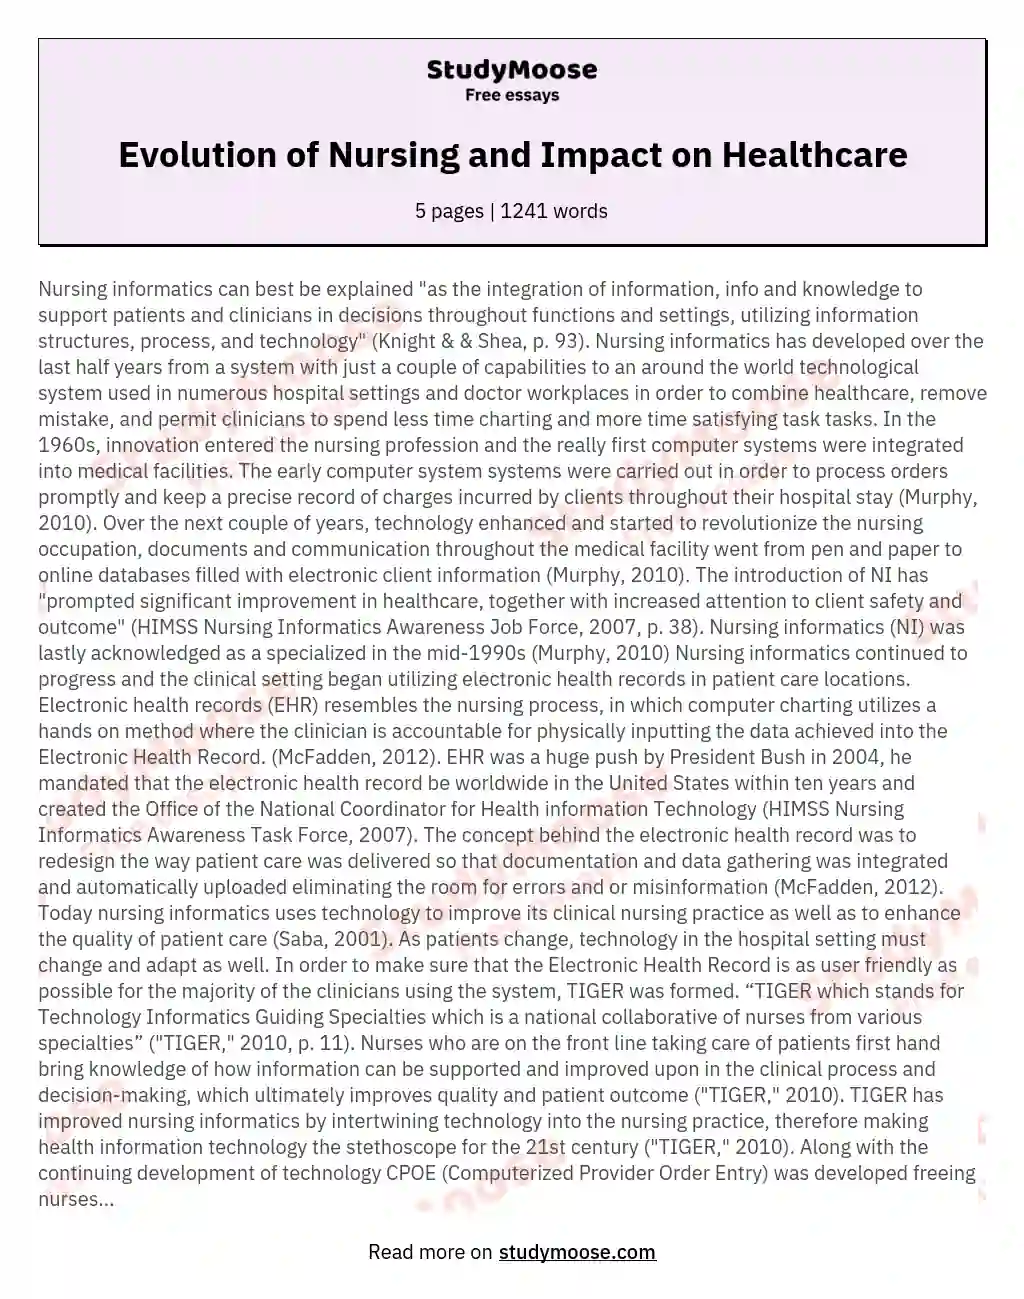 golden age in nursing informatics essay